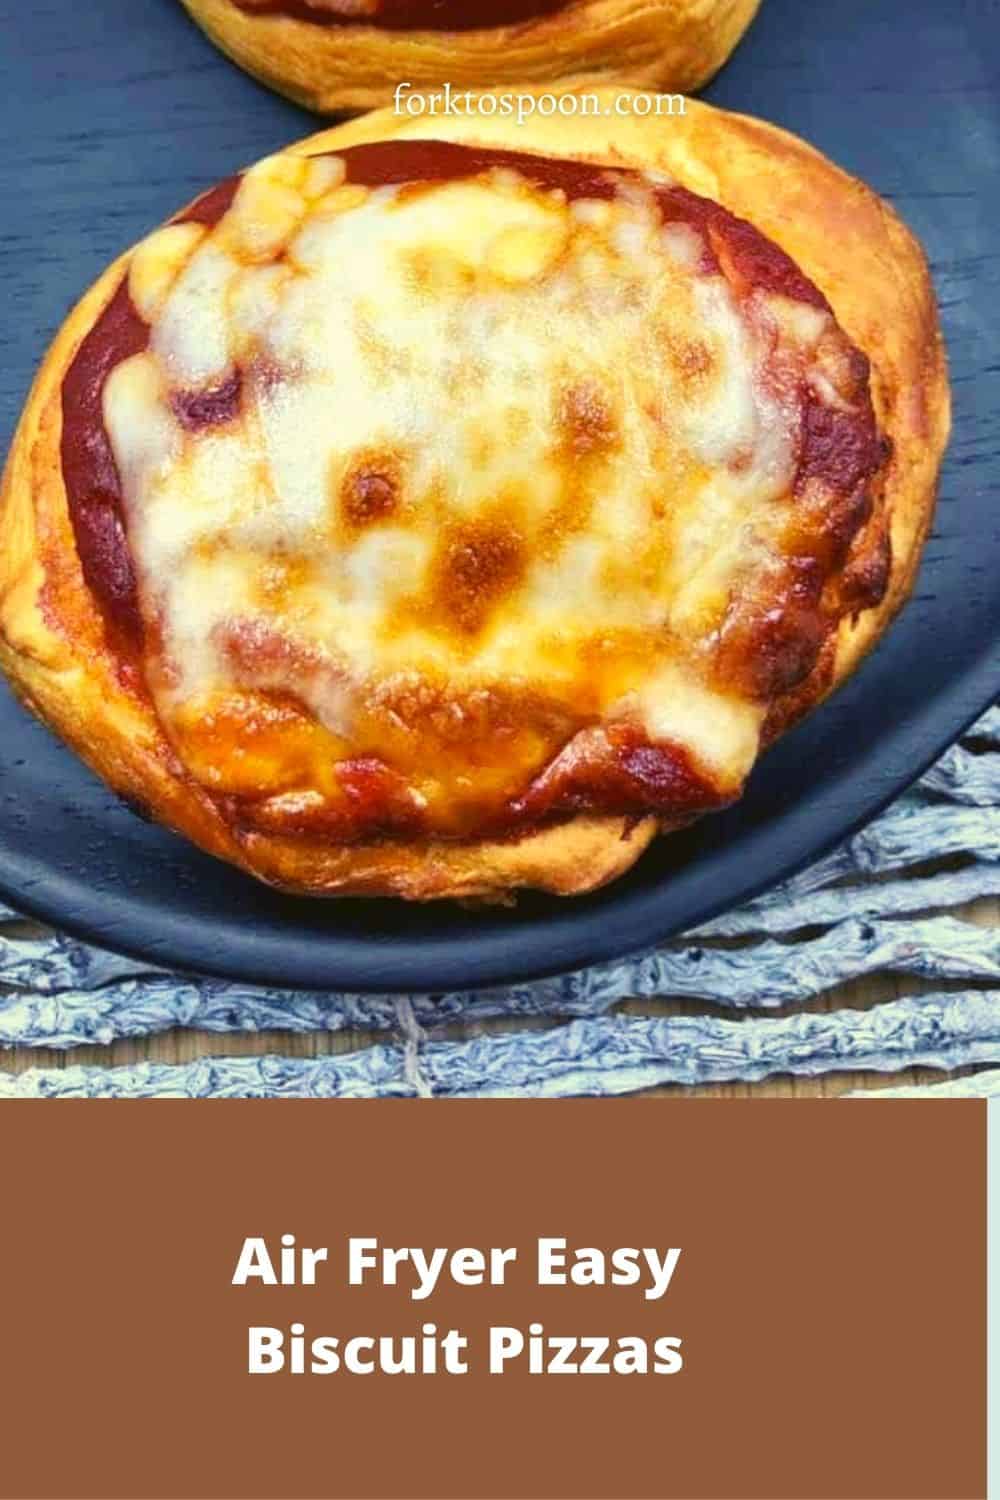 https://forktospoon.com/wp-content/uploads/2021/08/Air-Fryer-Easy-Biscuit-Pizzas-2.jpg